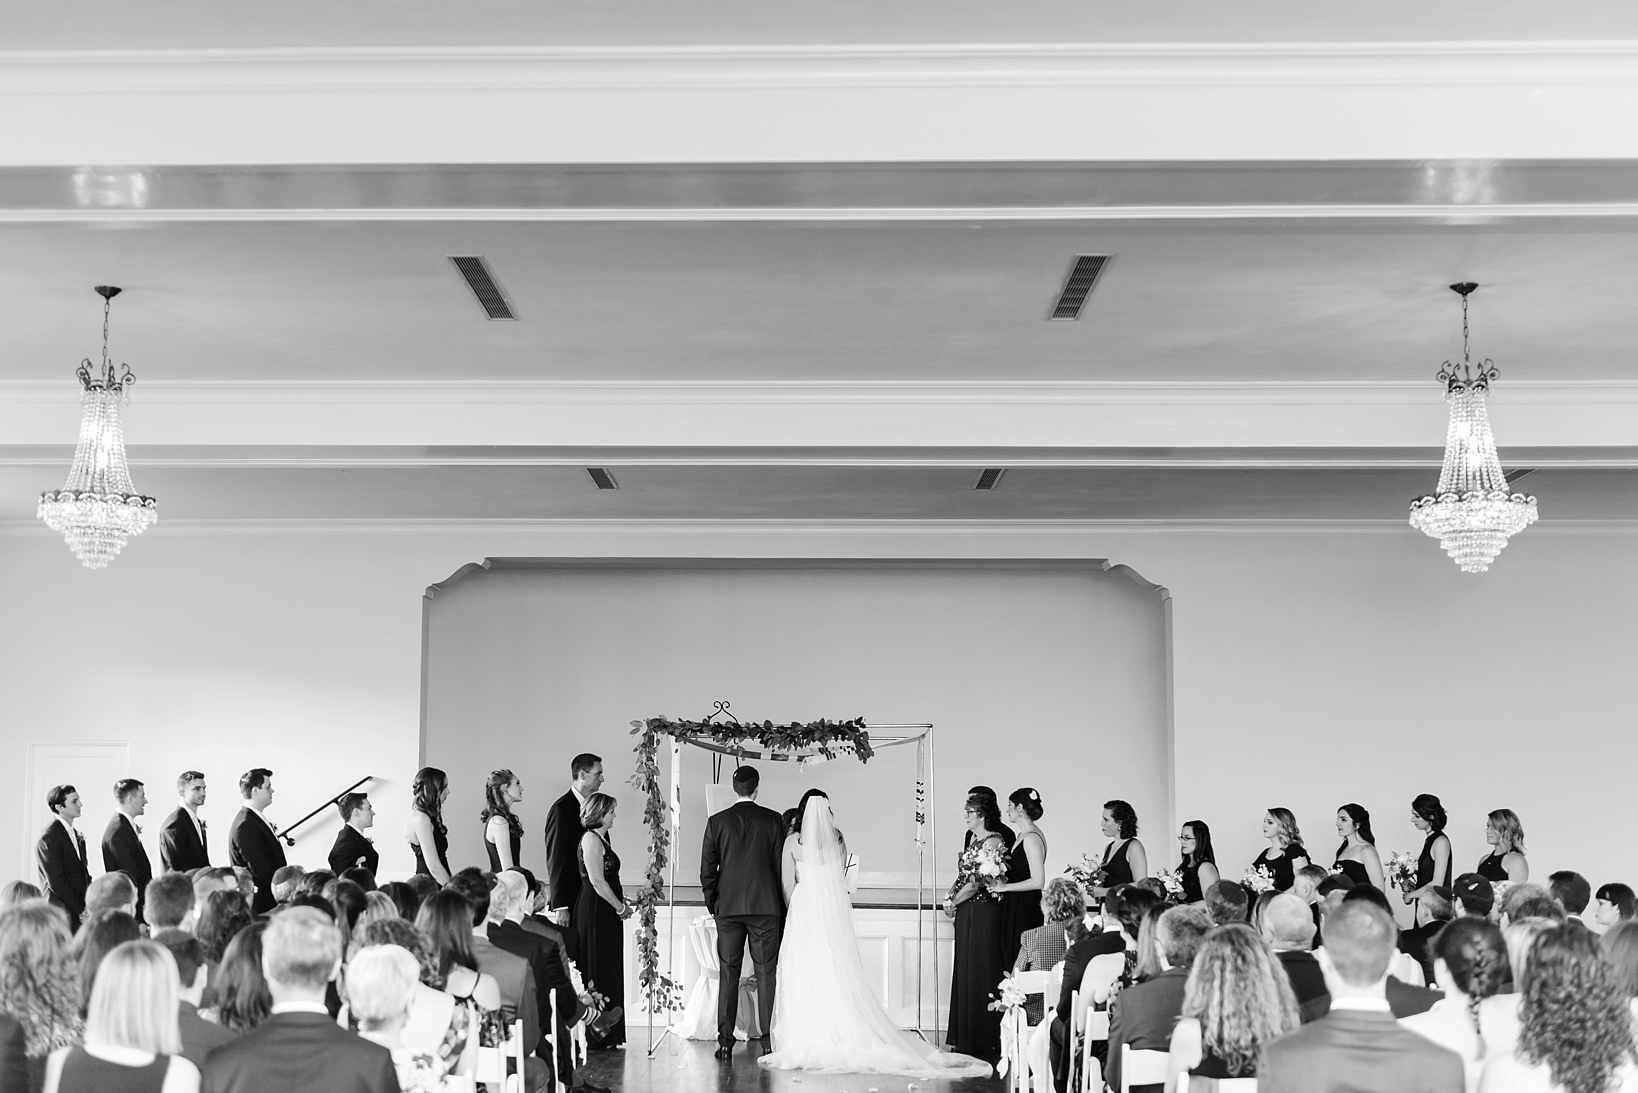 The wedding ceremony in the Orlo wedding venue in Tampa, Florida